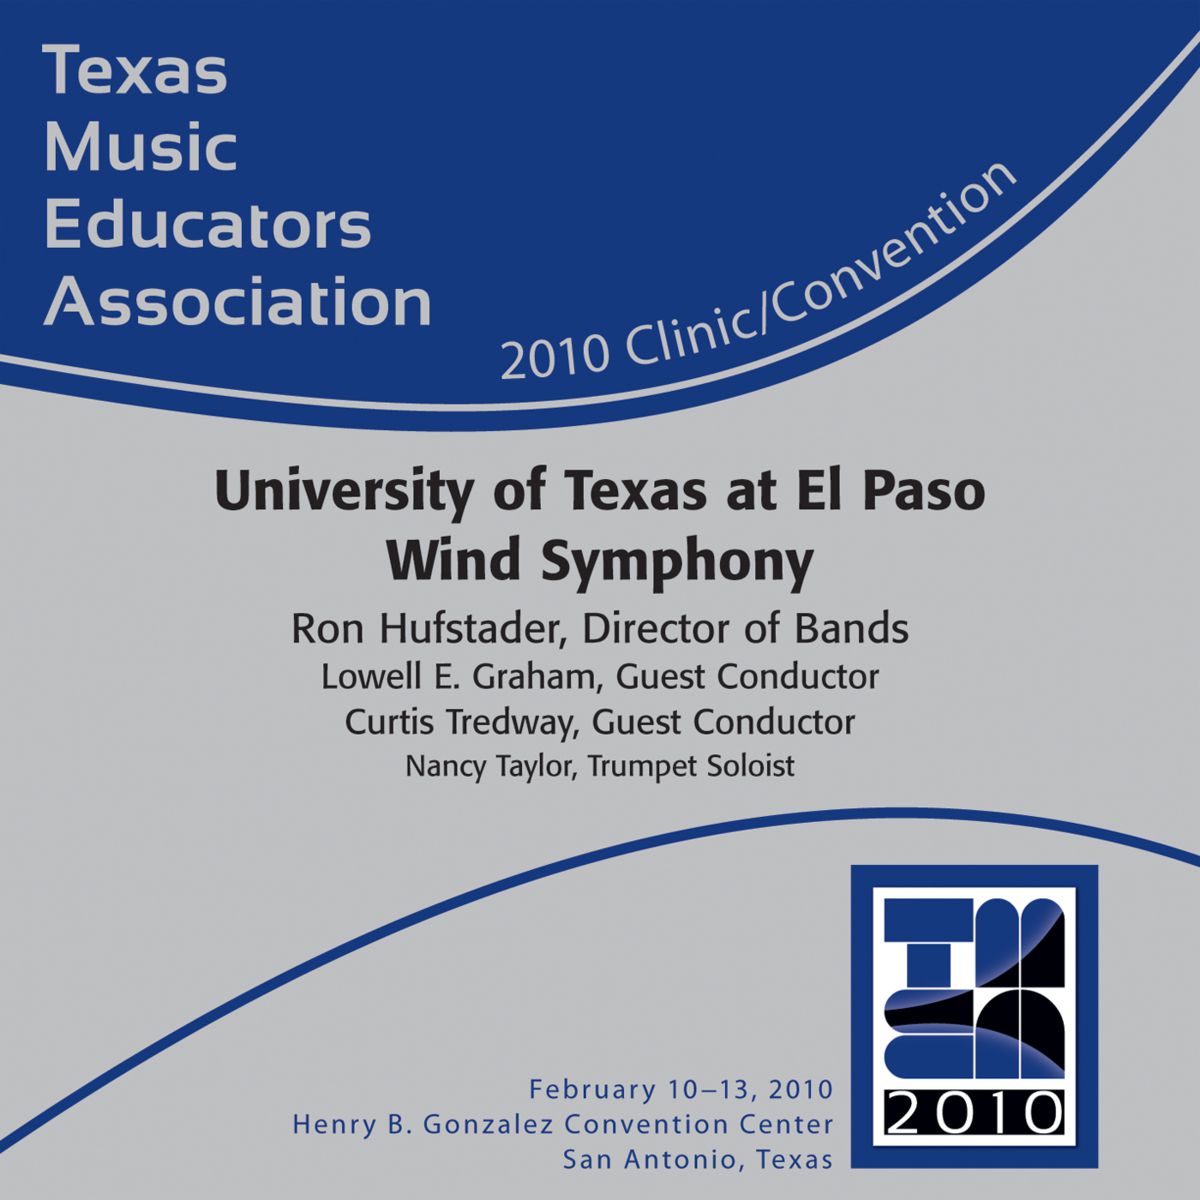 2010 Texas Music Educators Association: University of Texas at El Paso Wind Symphony - cliquer ici